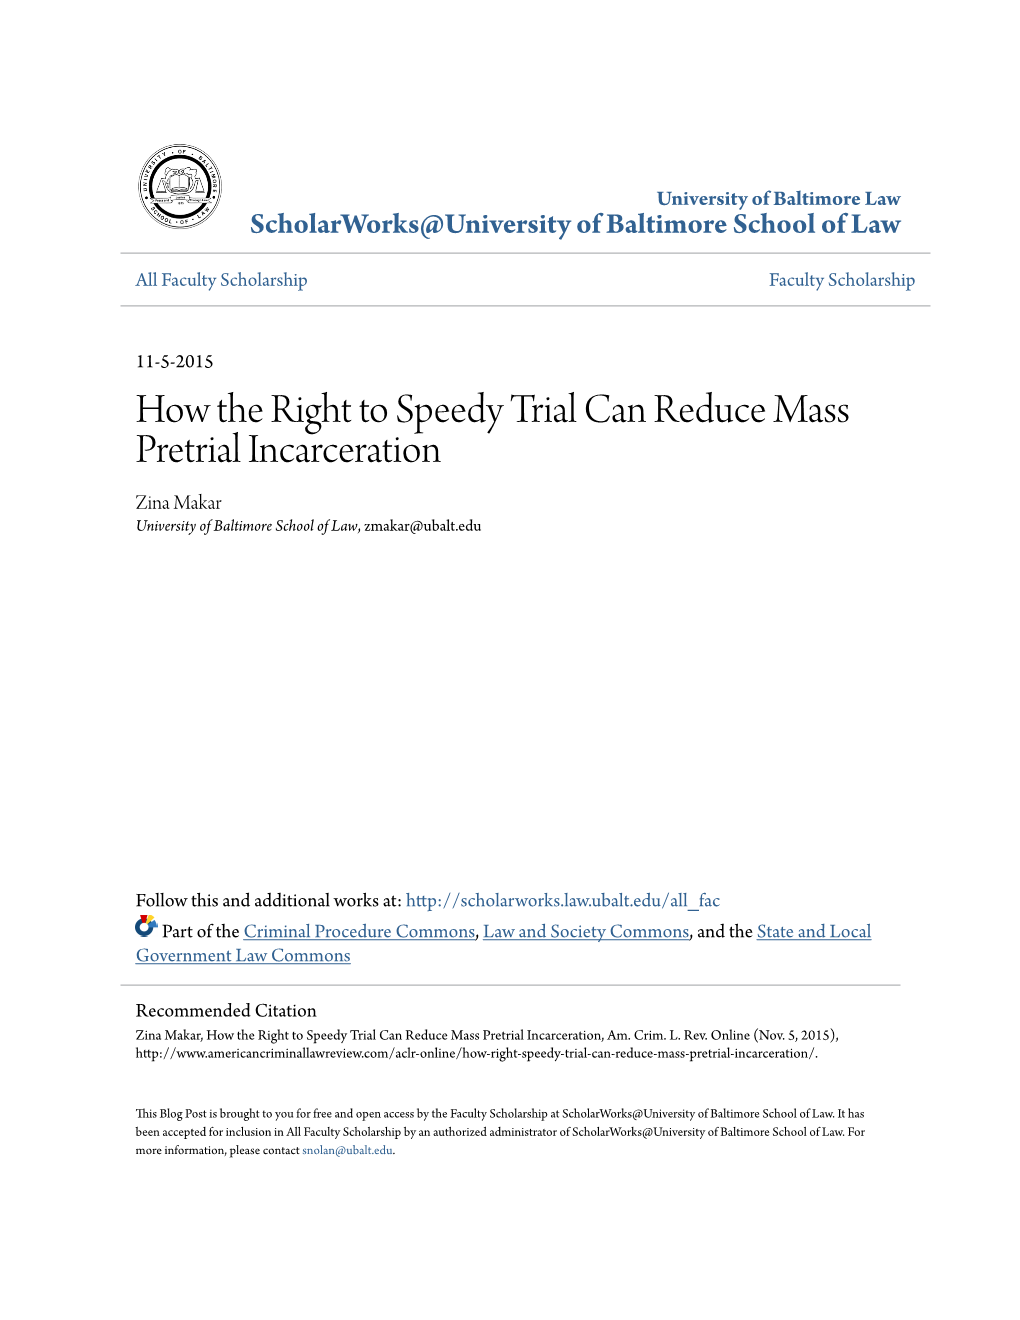 How the Right to Speedy Trial Can Reduce Mass Pretrial Incarceration Zina Makar University of Baltimore School of Law, Zmakar@Ubalt.Edu